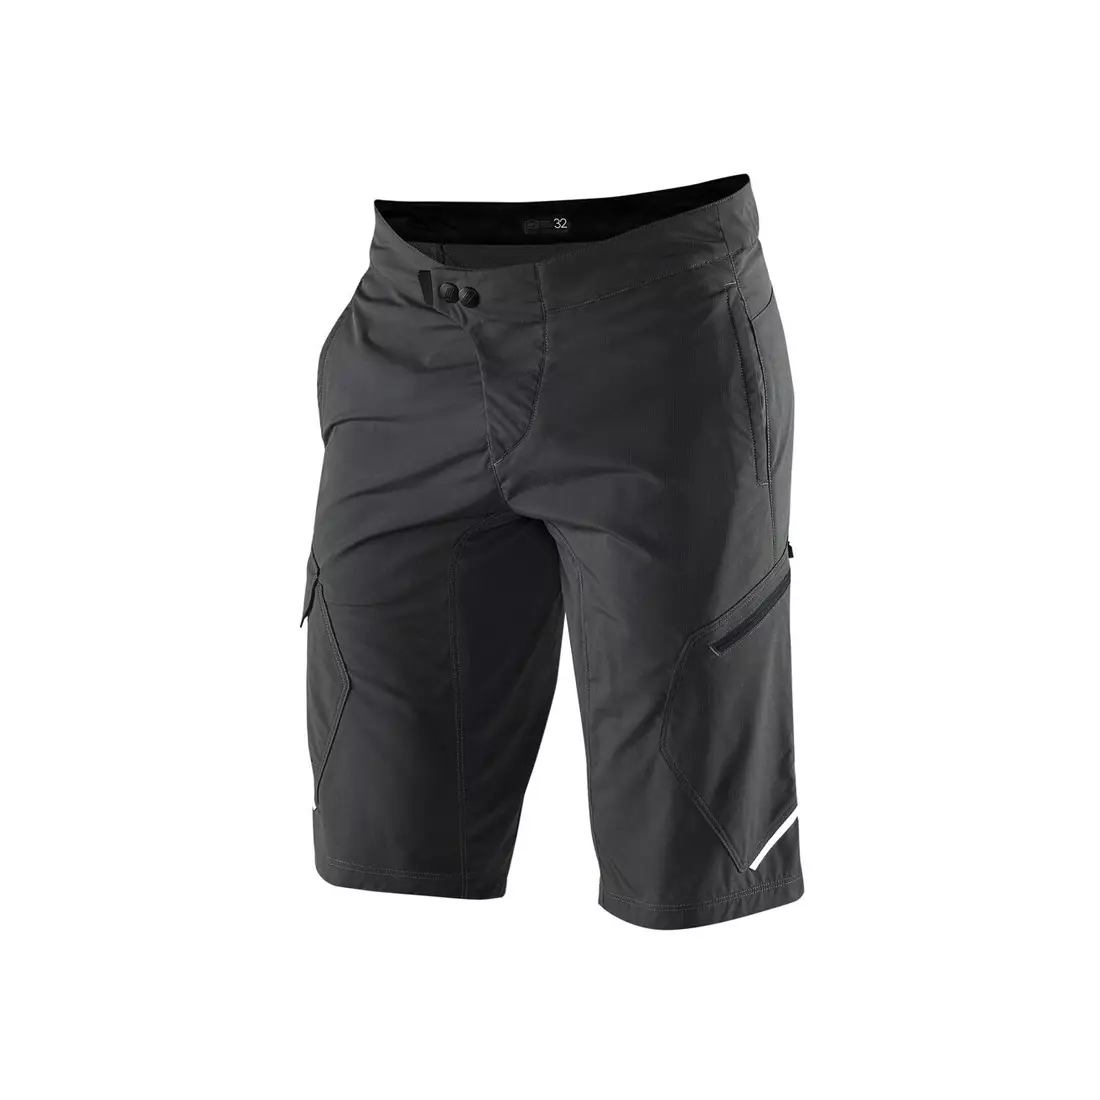 100% men's cycling shorts ridecamp charcoal STO-42401-052-30